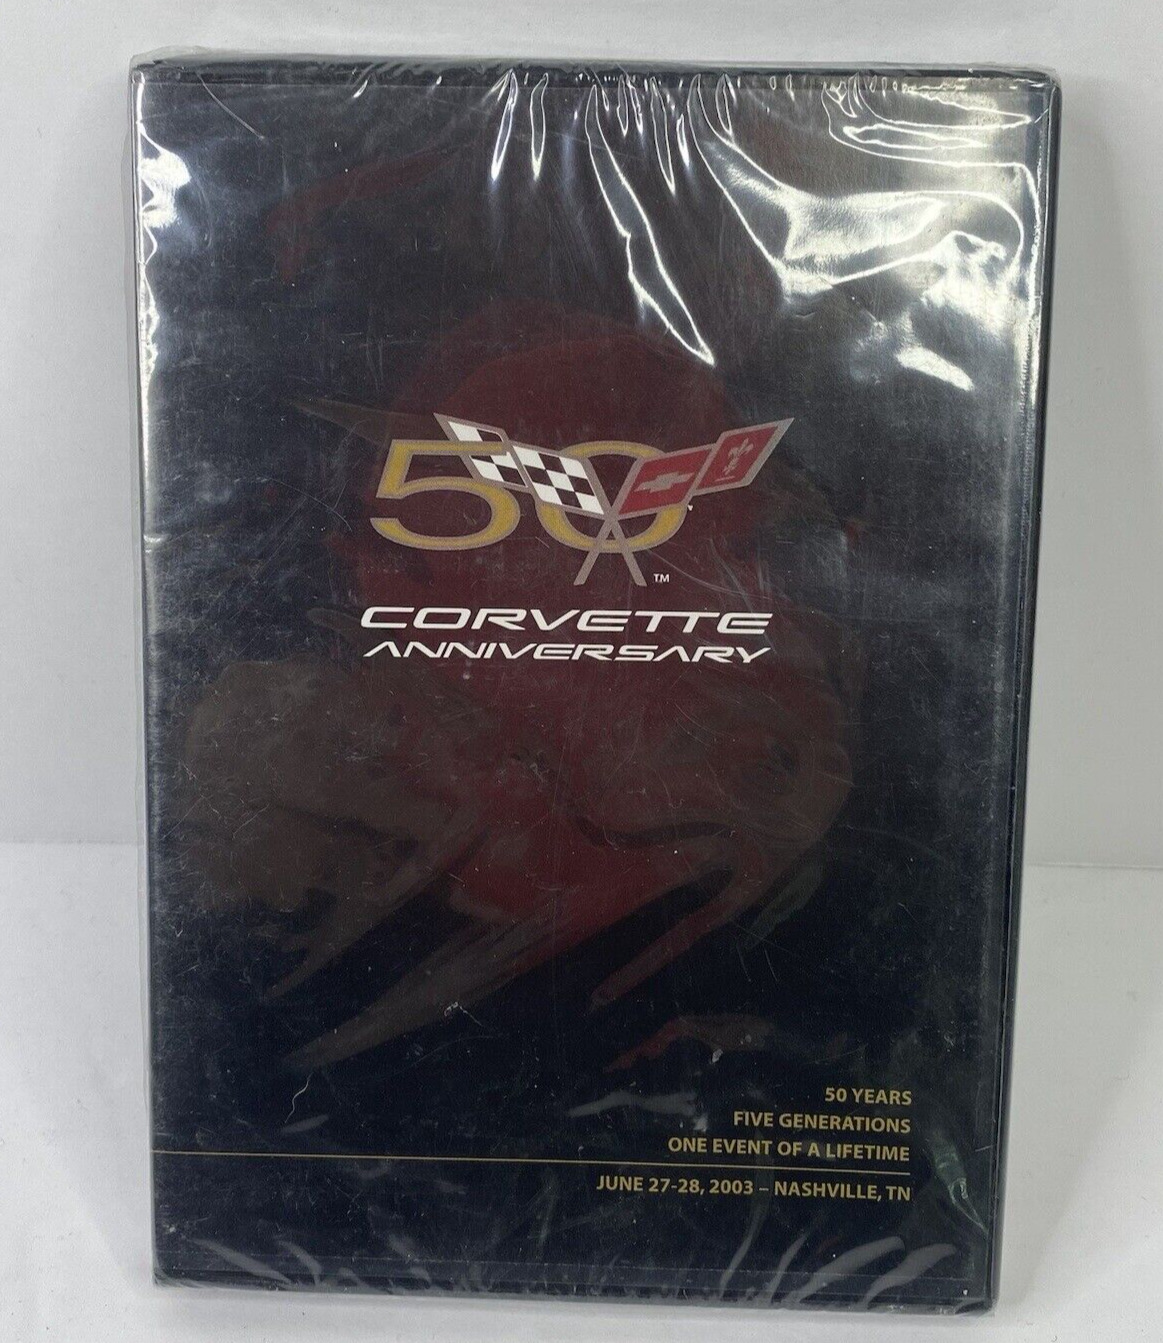 NEW 2003 Corvette 50th Anniversary CD-ROM Nashville Event Collector's Item